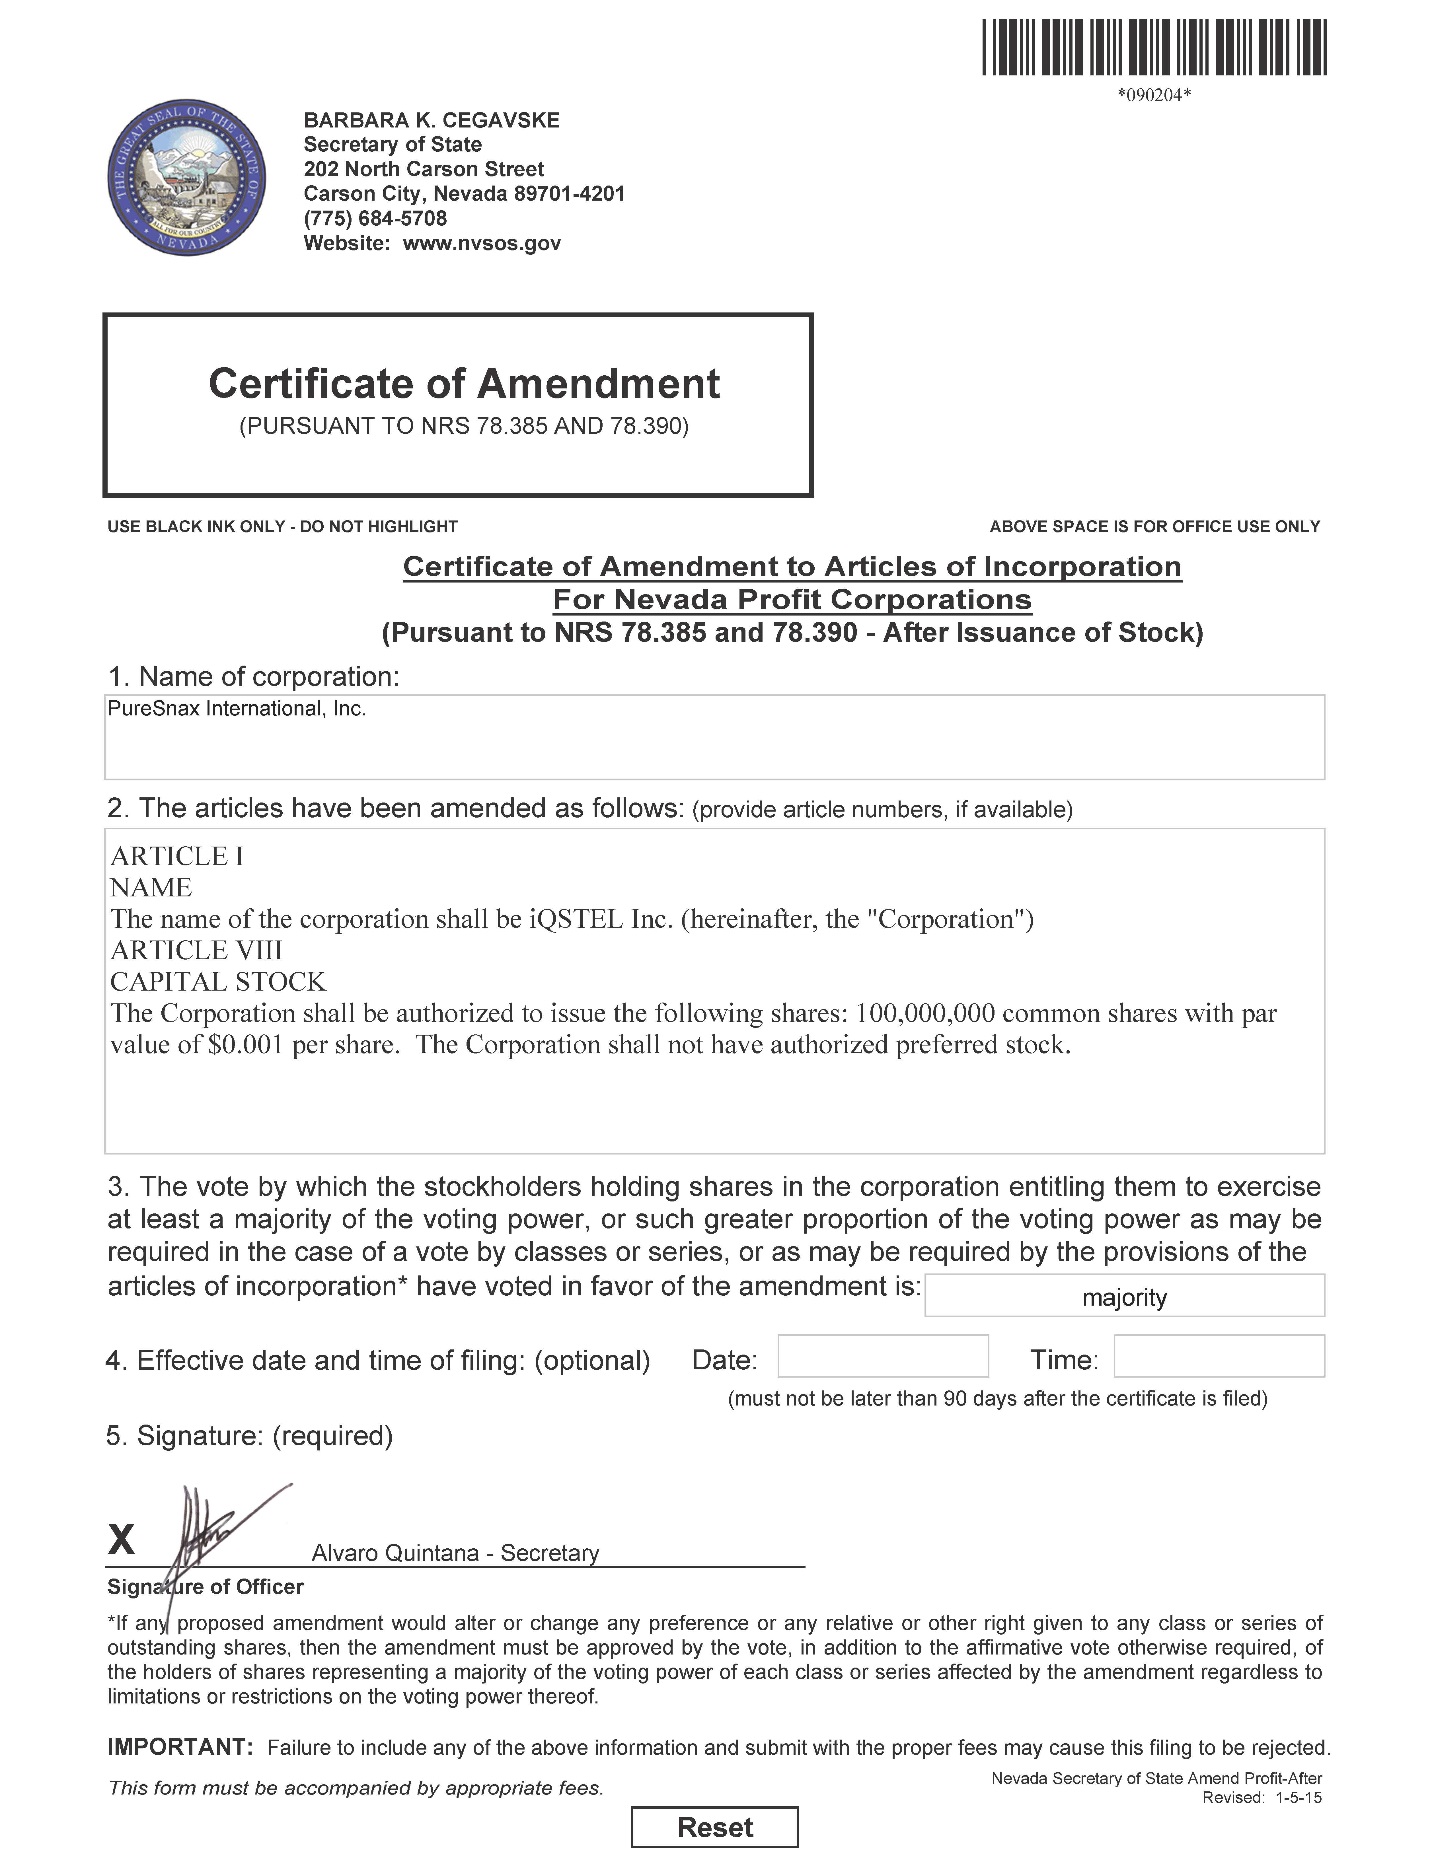 NVSOS Certificate of Amendment_Rev_AQ-signed.jpg